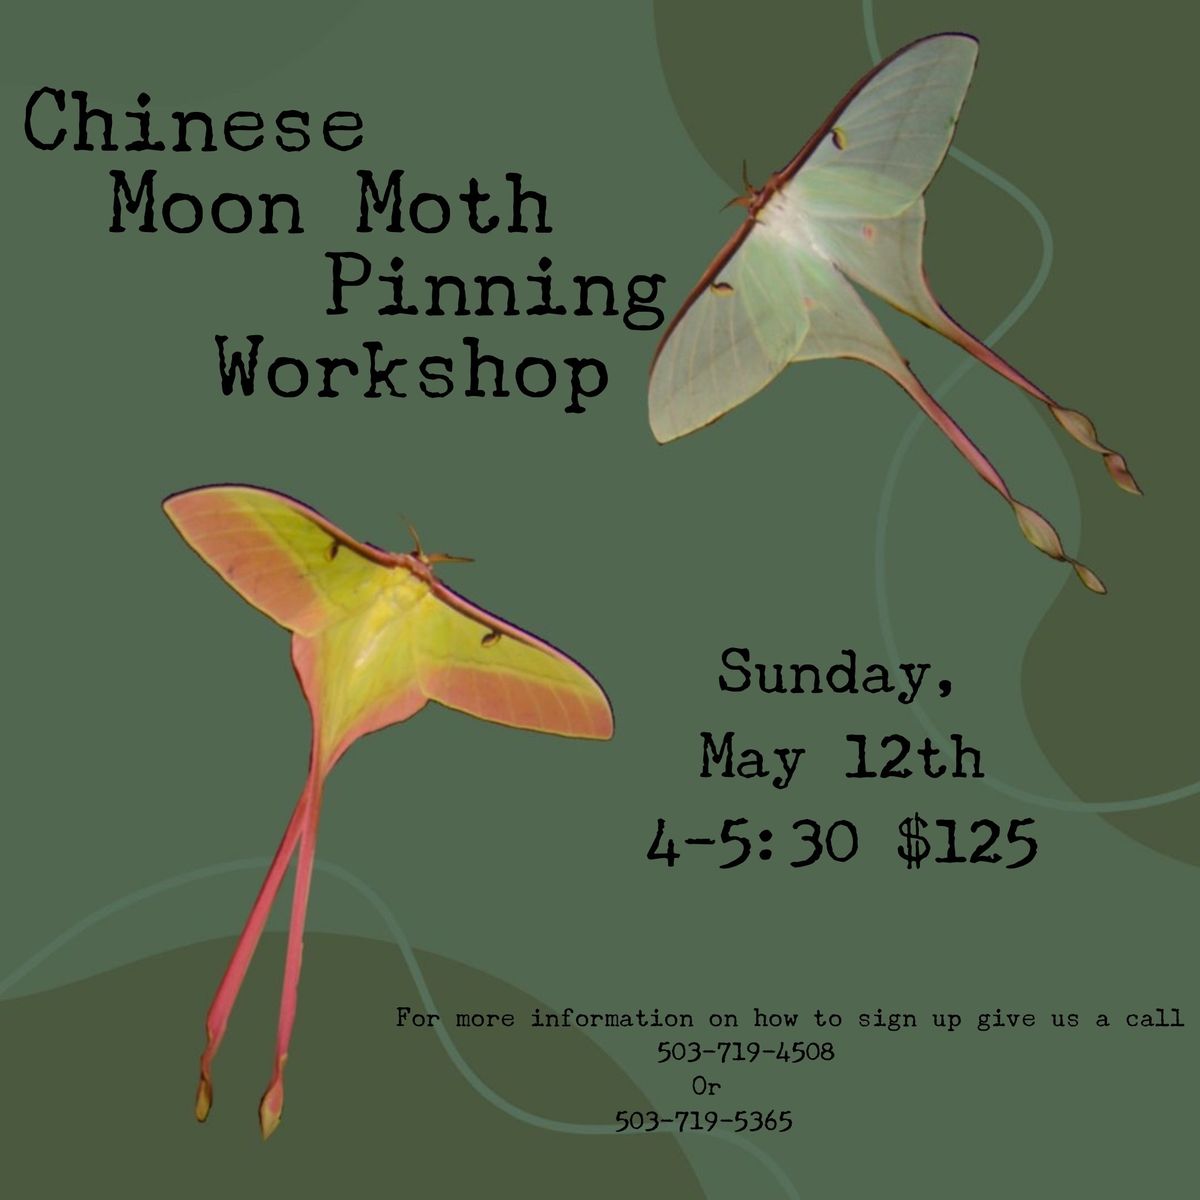 Chinese Moon Moth Pinning Workshop